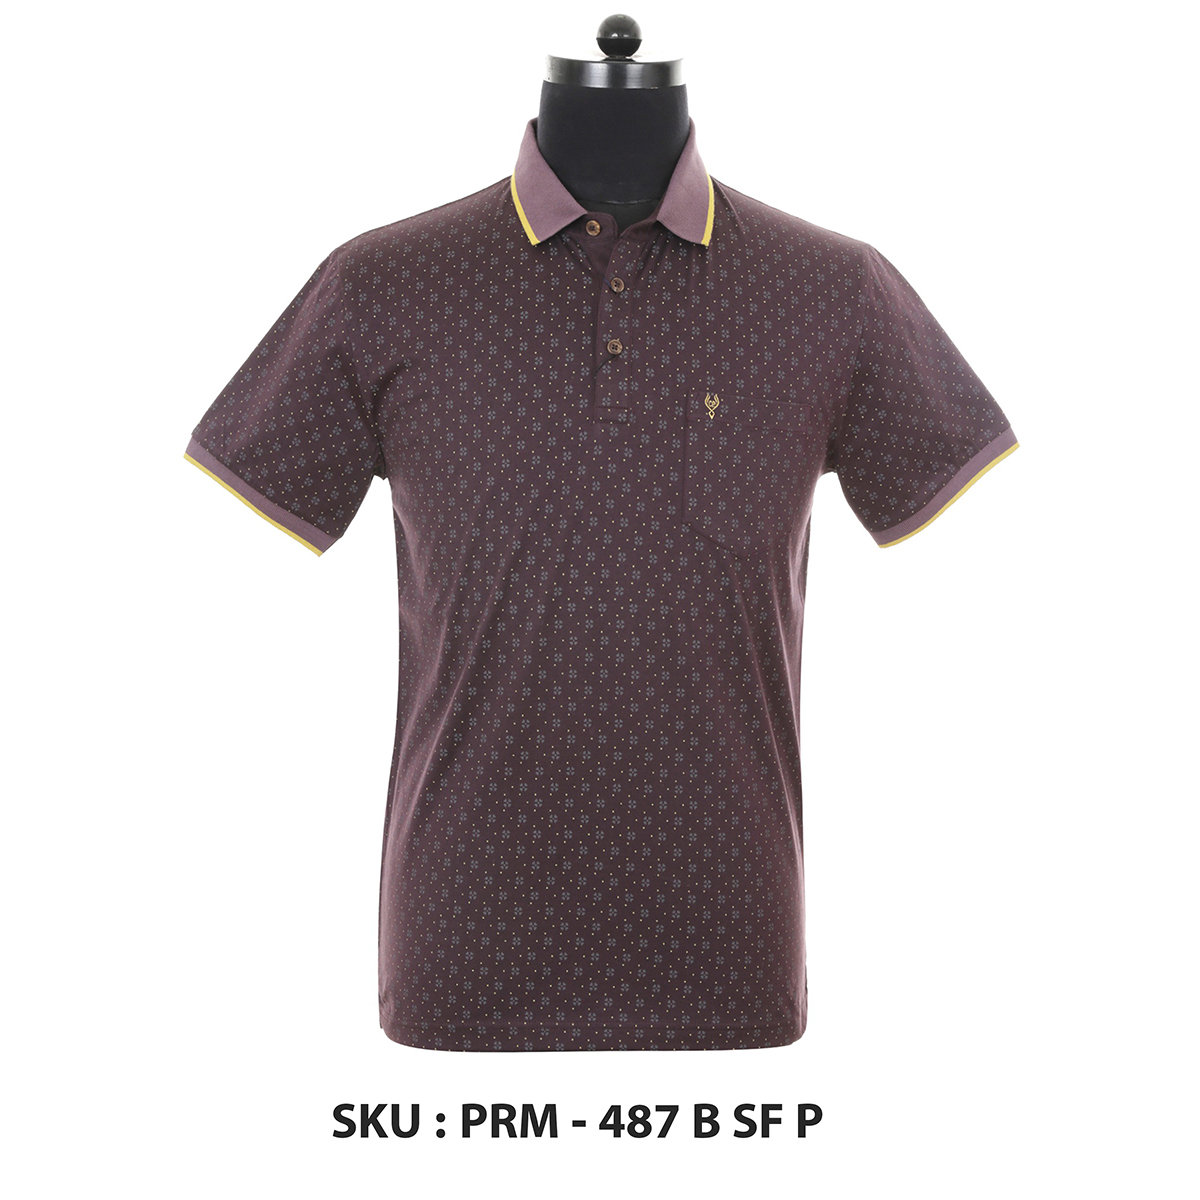 Classic Polo Mens T Shirt Prm - 487 B Sf P Brown S